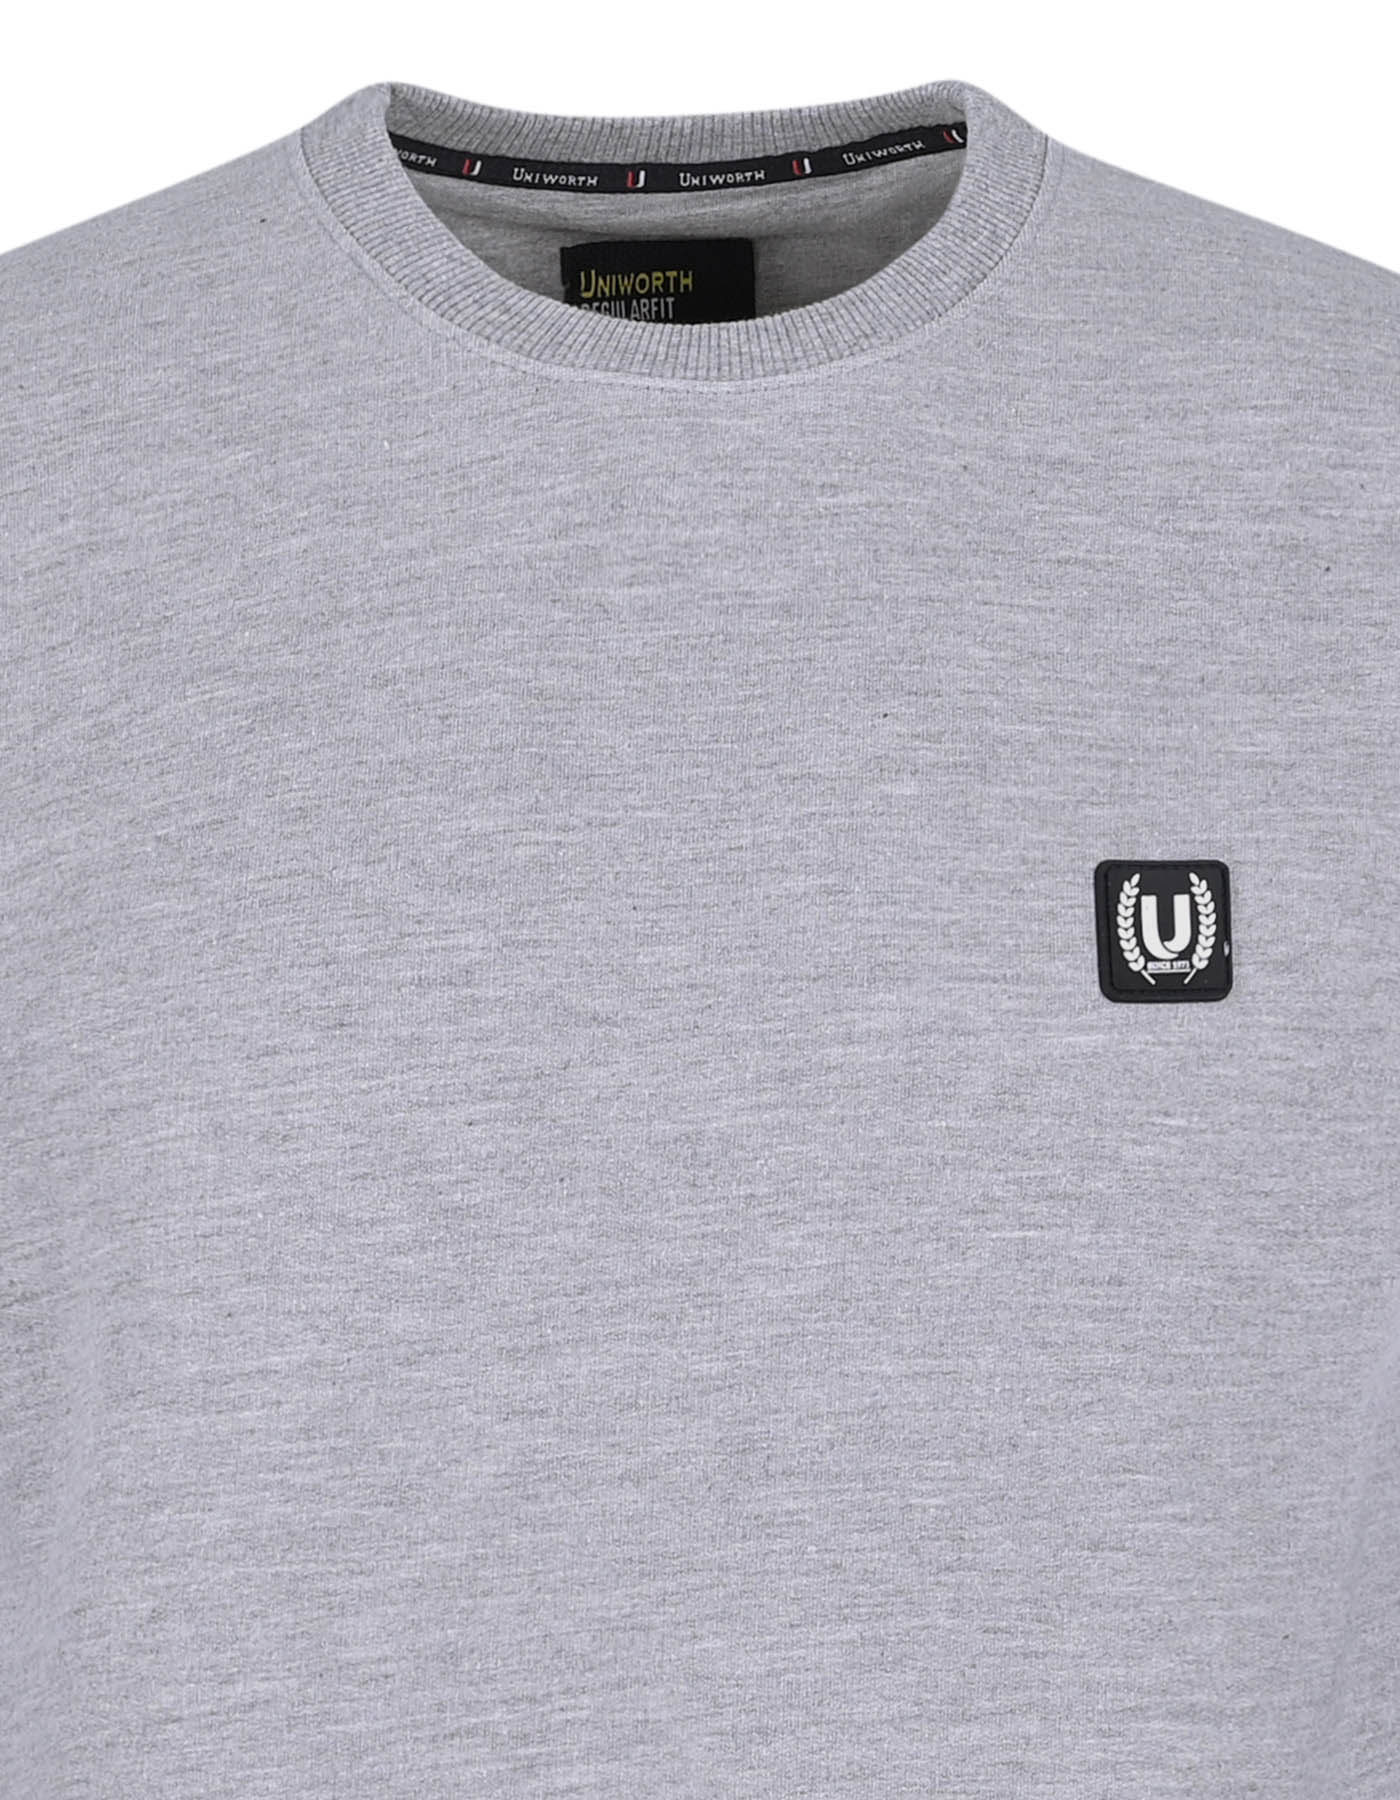 Sweat Shirt Grey/White S TSS2378 Uniworth Cut n Sew